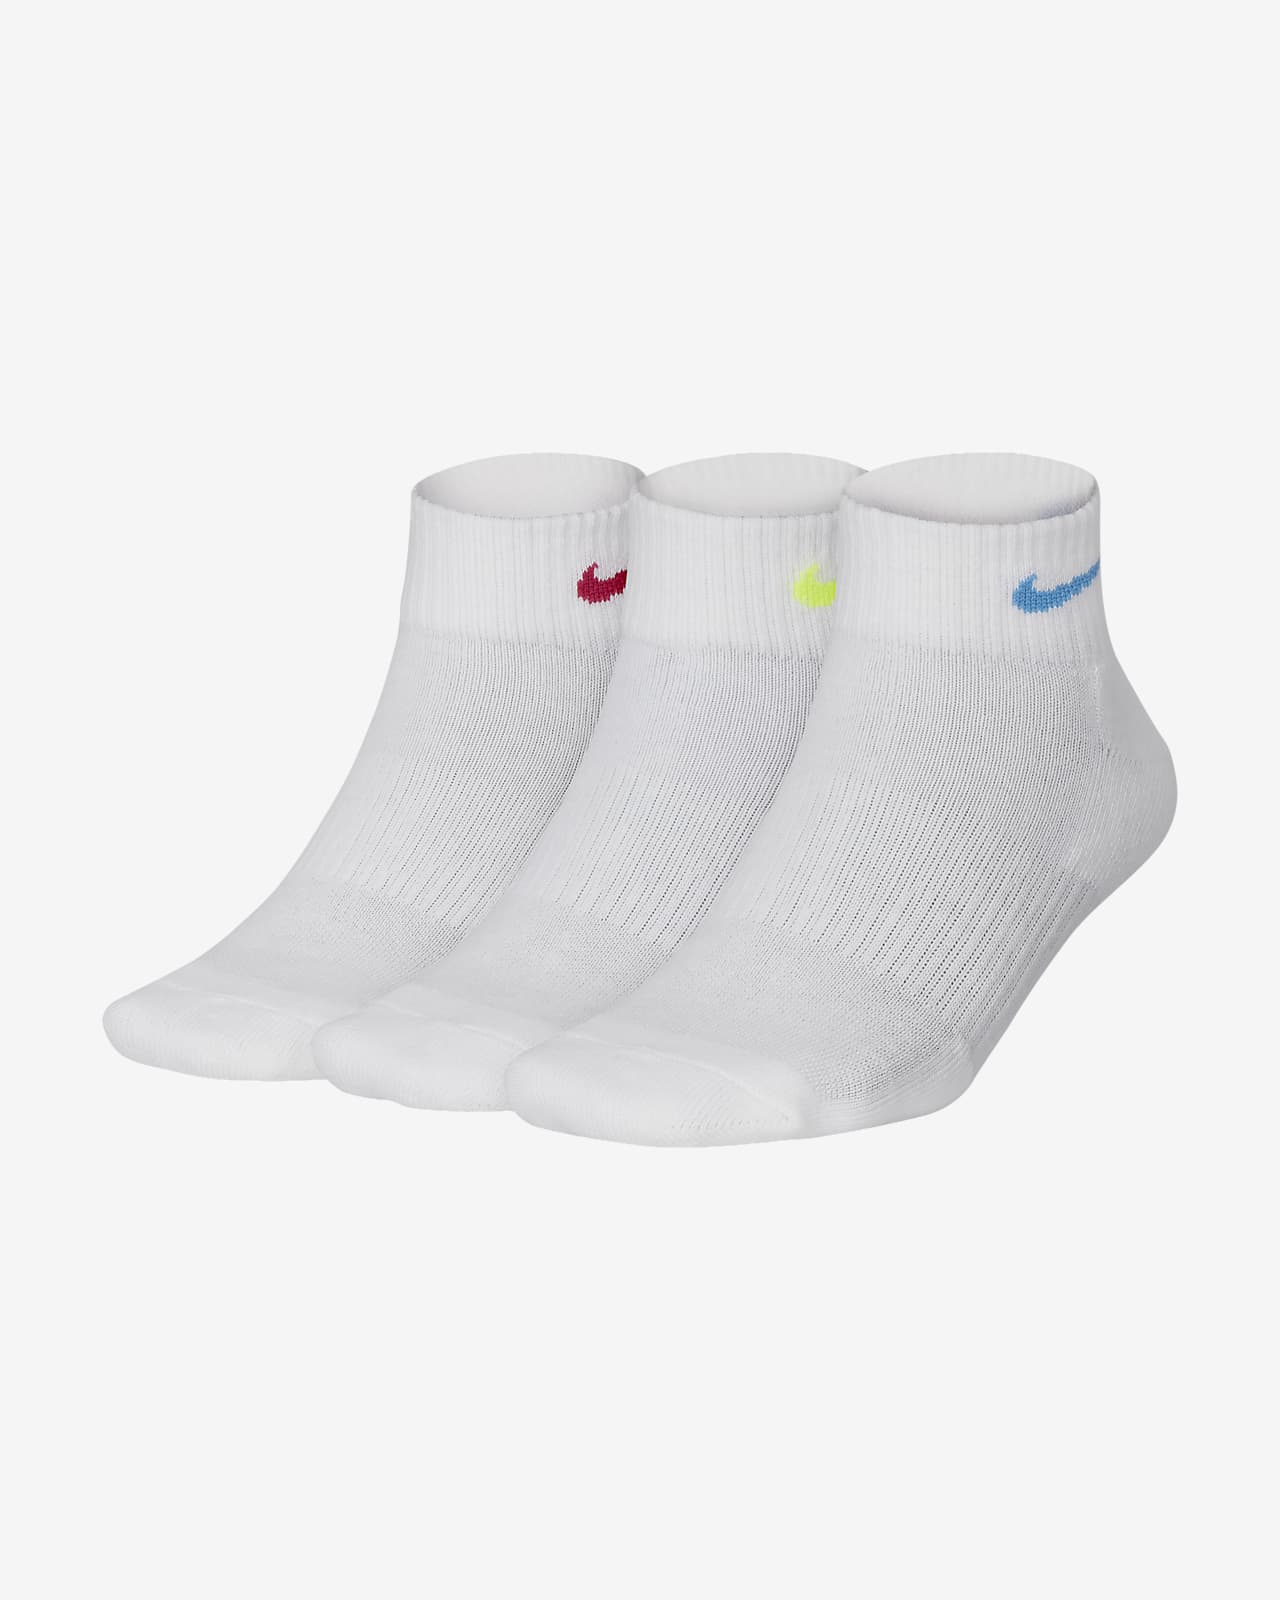 nike socks ankle socks